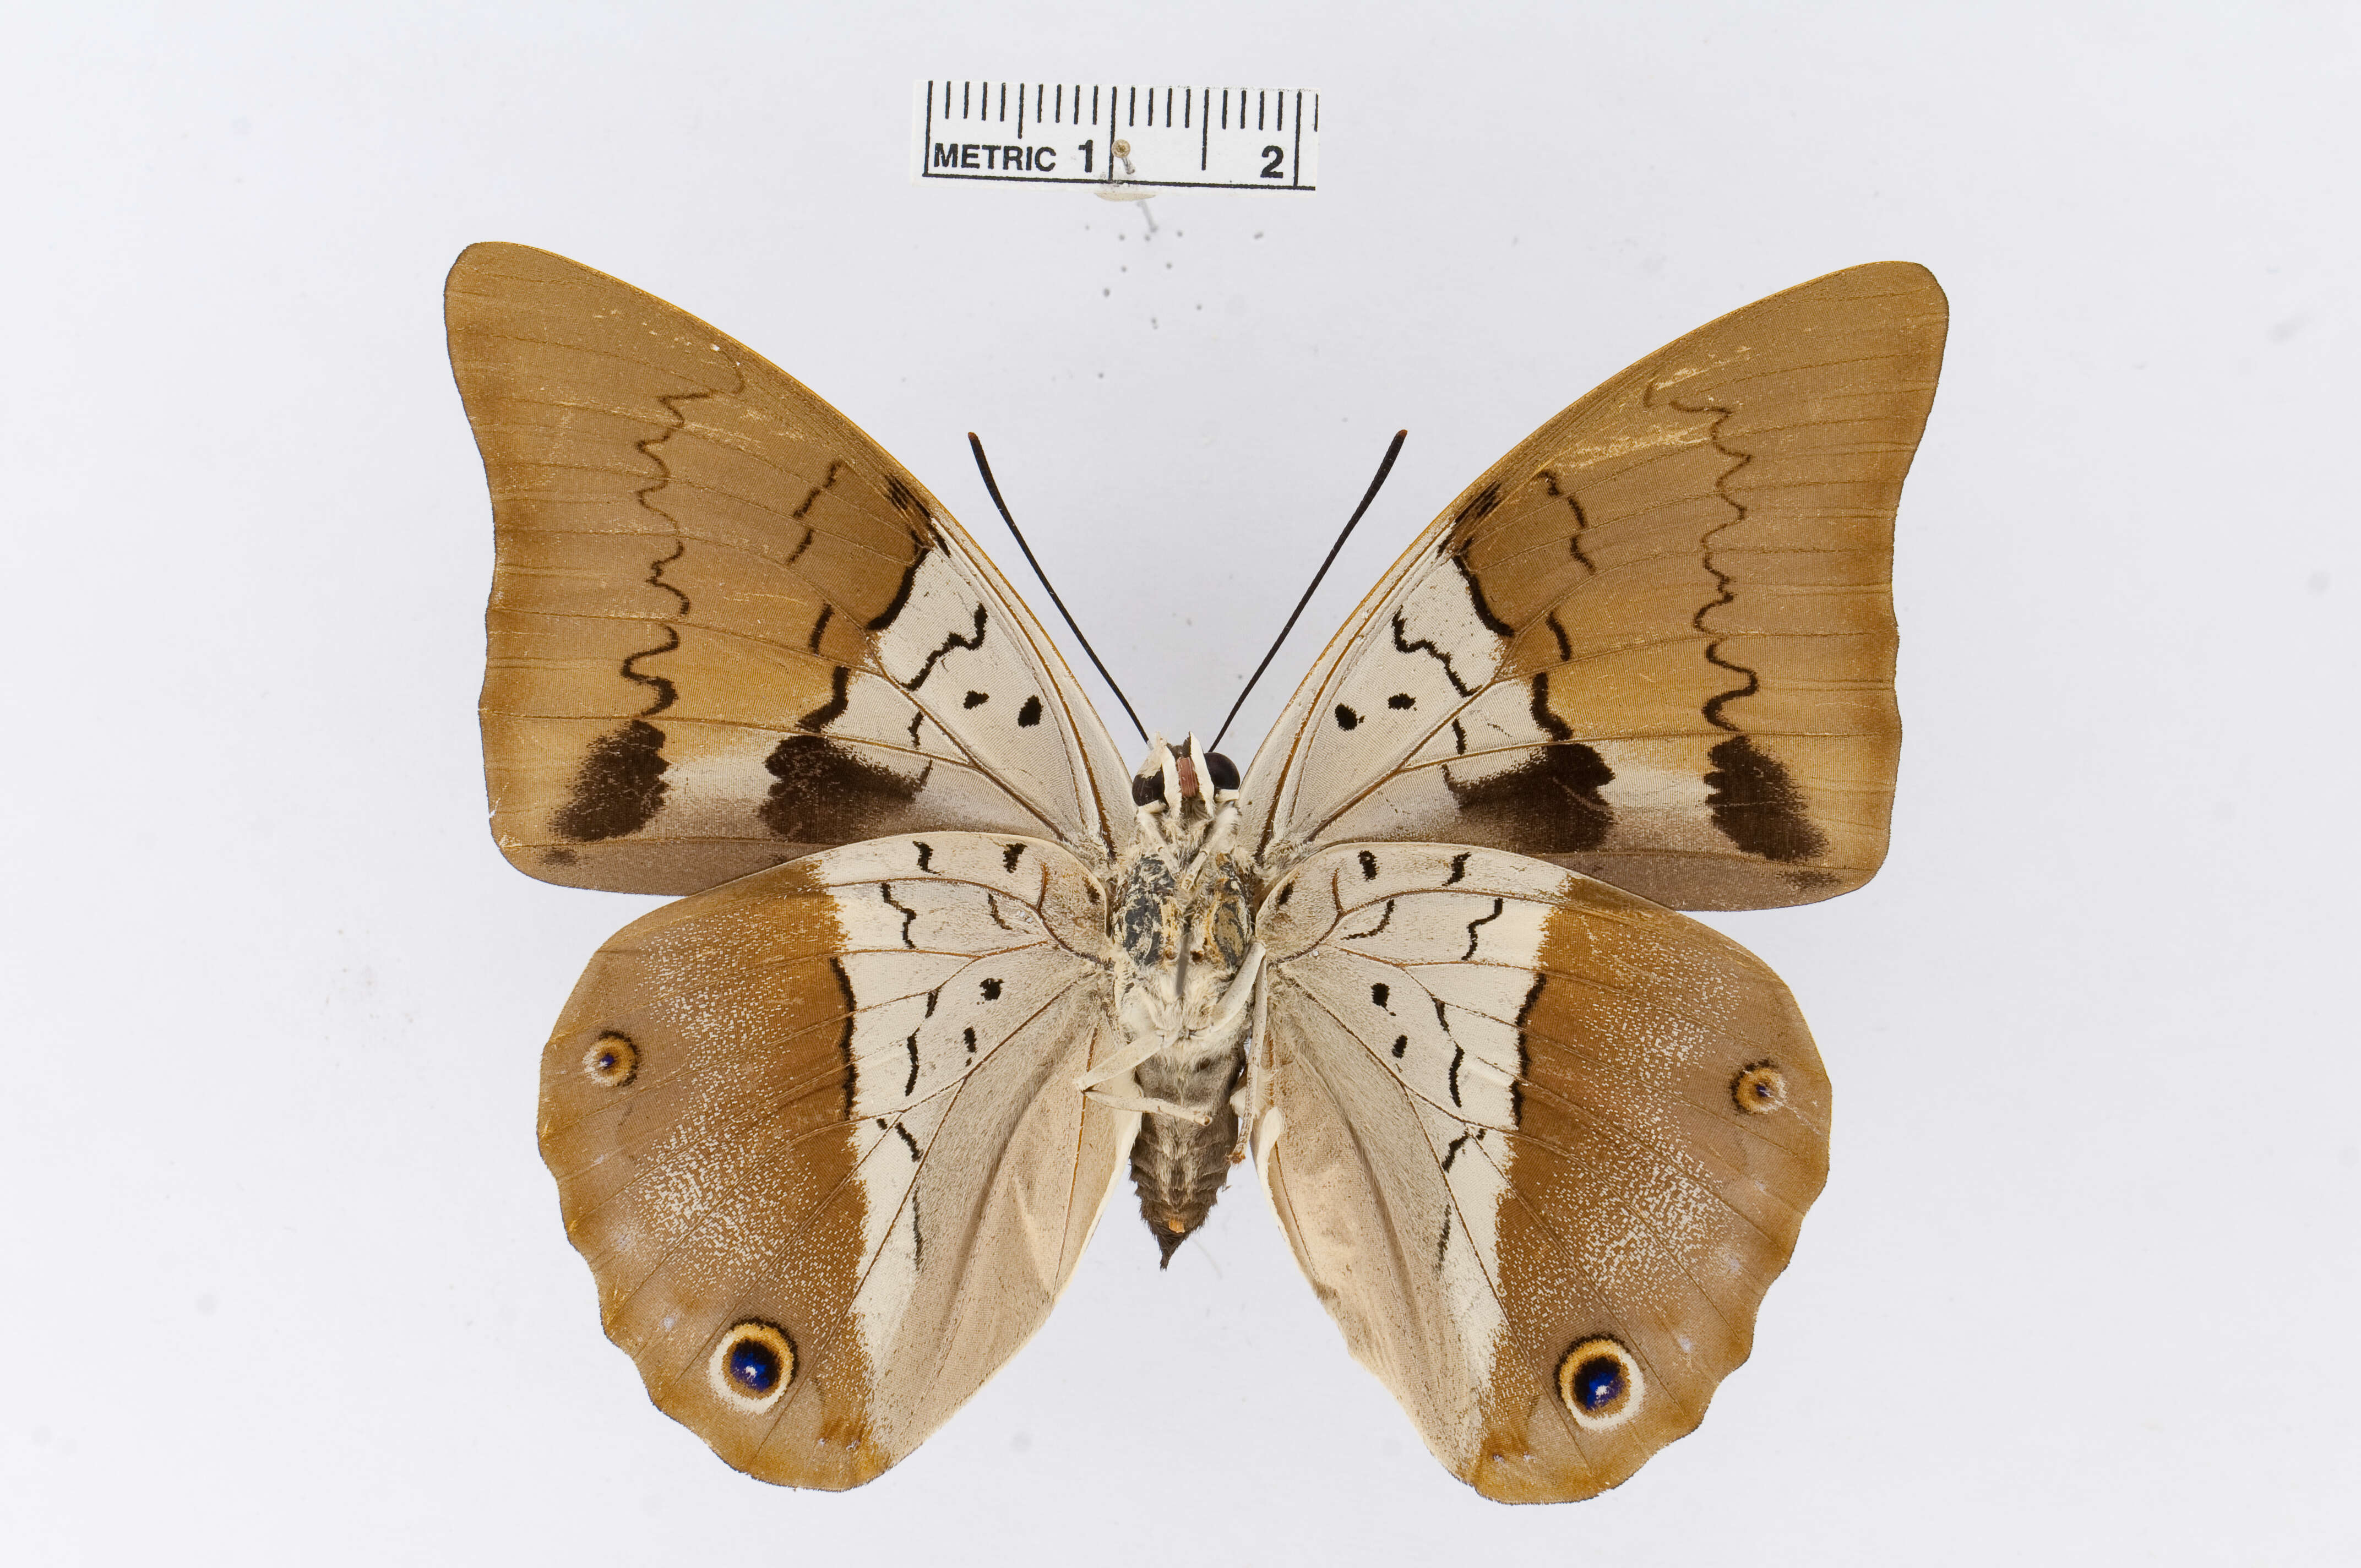 Image of Prepona dexamenus Hopffer 1874